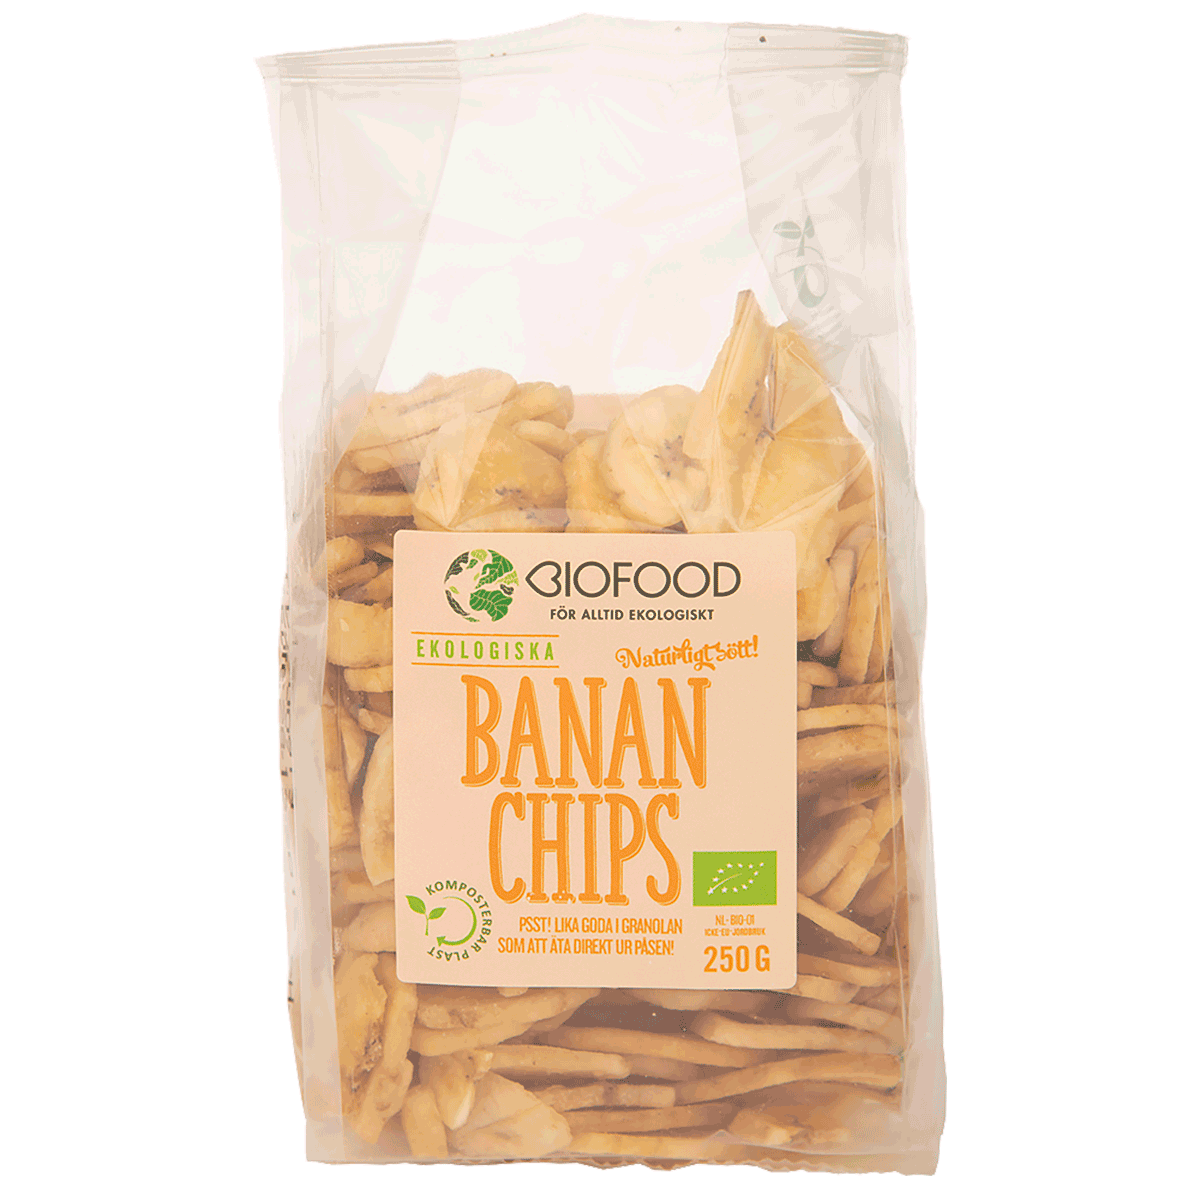 Banana chips from Biofood